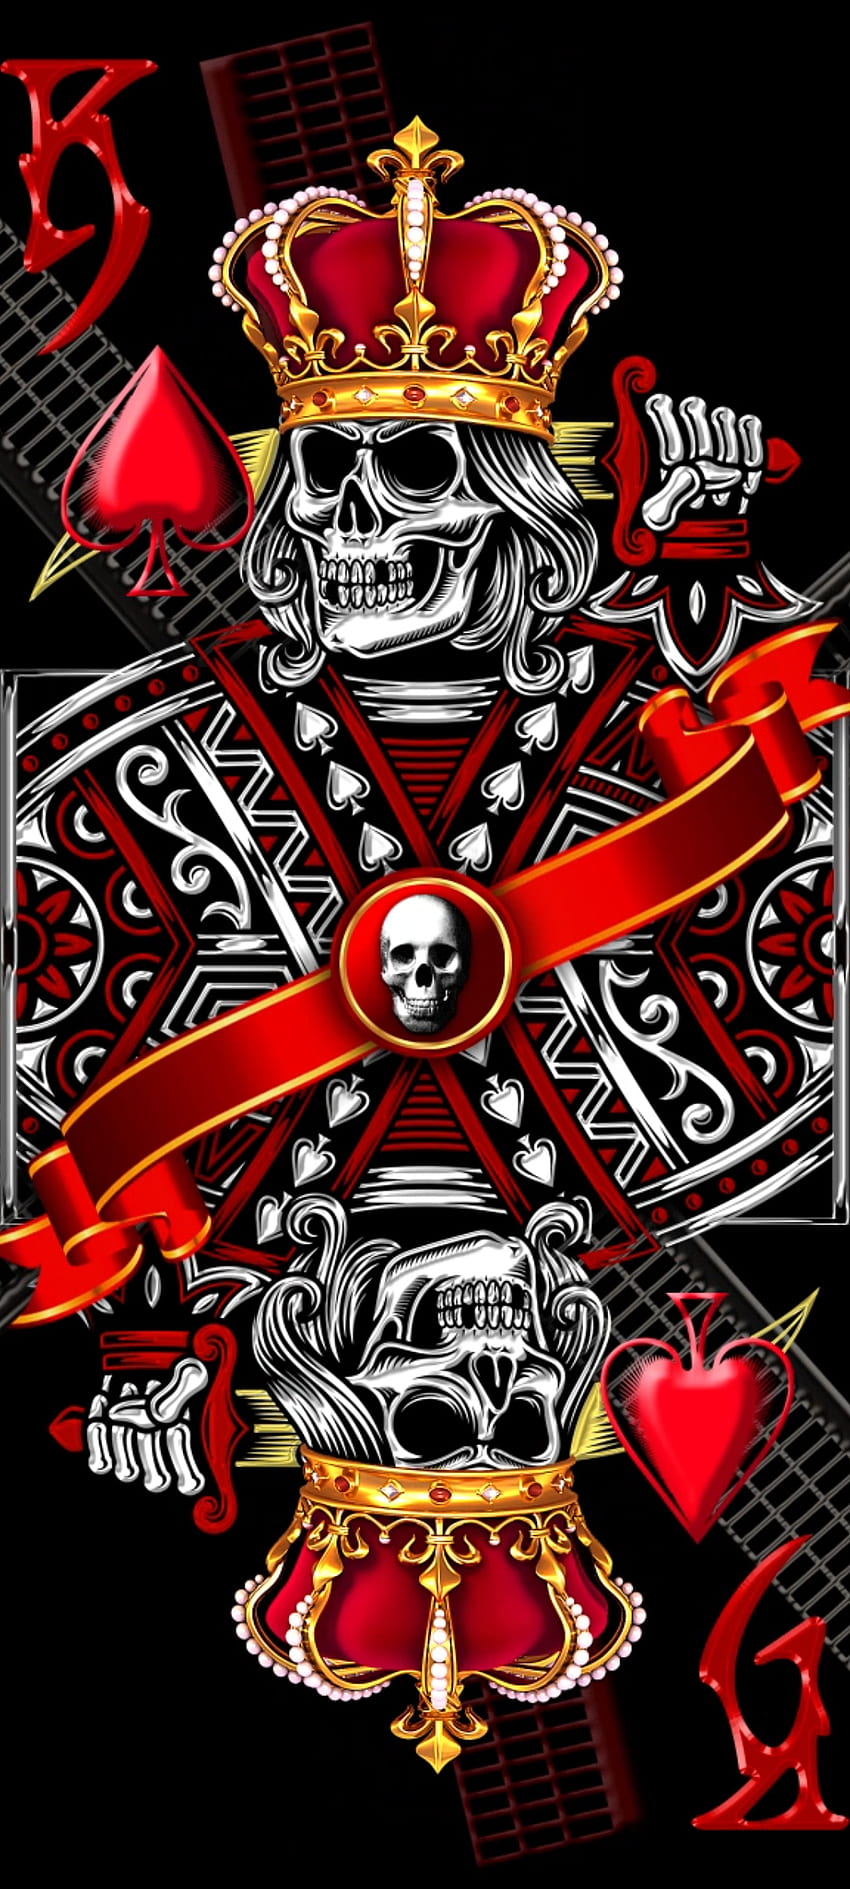 Rey de la tarjeta del cráneo, Alfabeto, rojo, arte, premium, Último k, lujo, K fondo de pantalla del teléfono